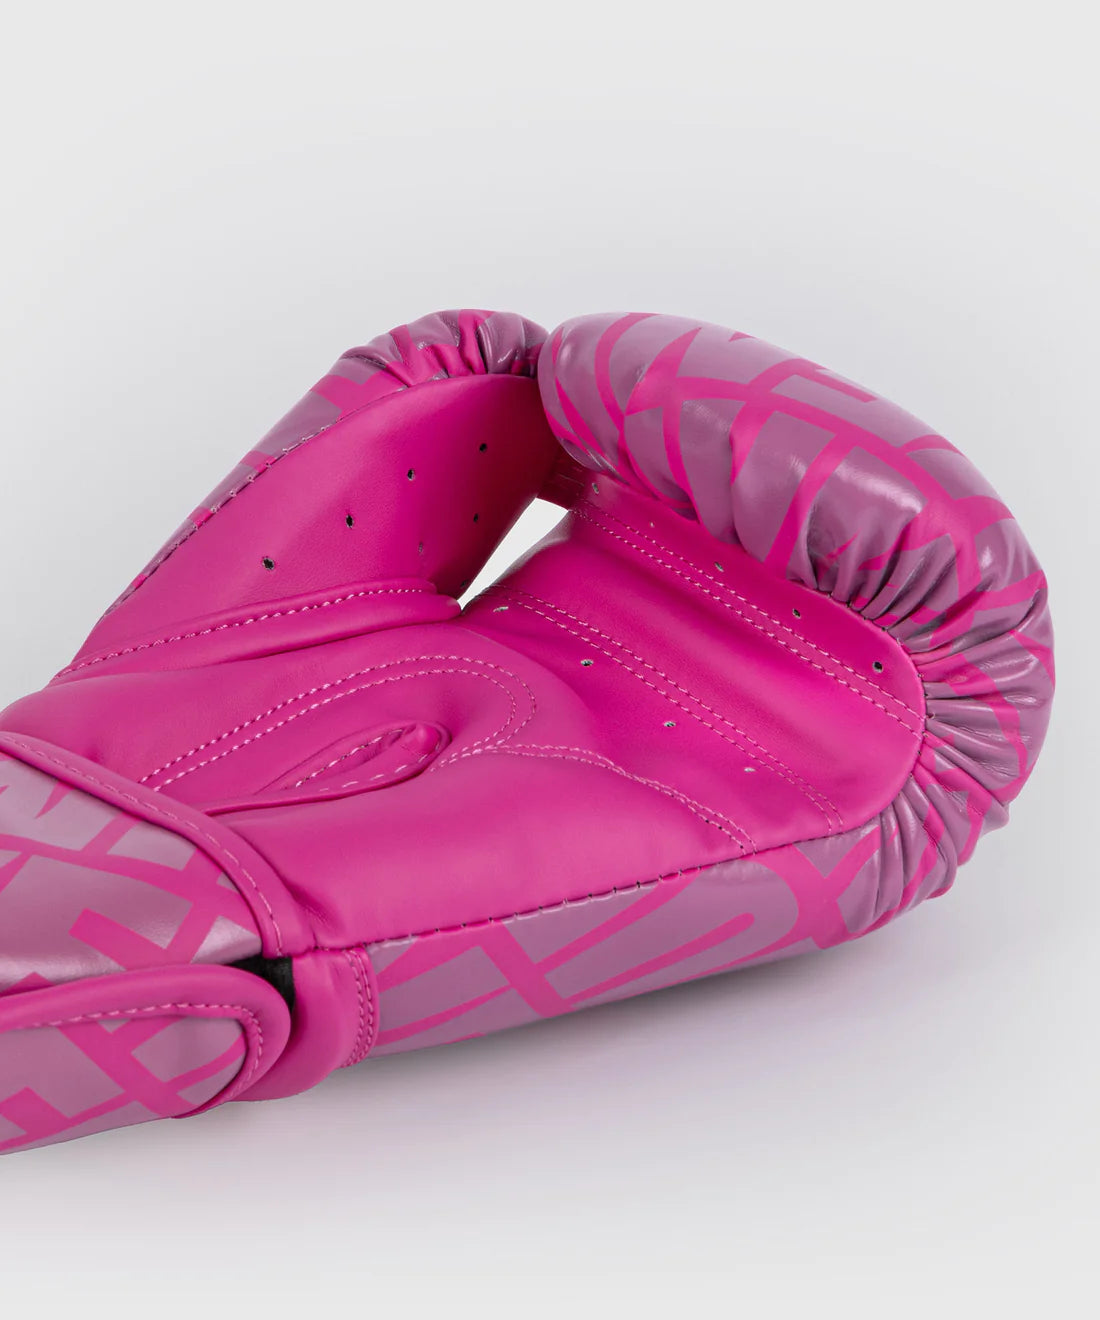 Venum Contender 1.5 XT Boxing Gloves - Fight Co